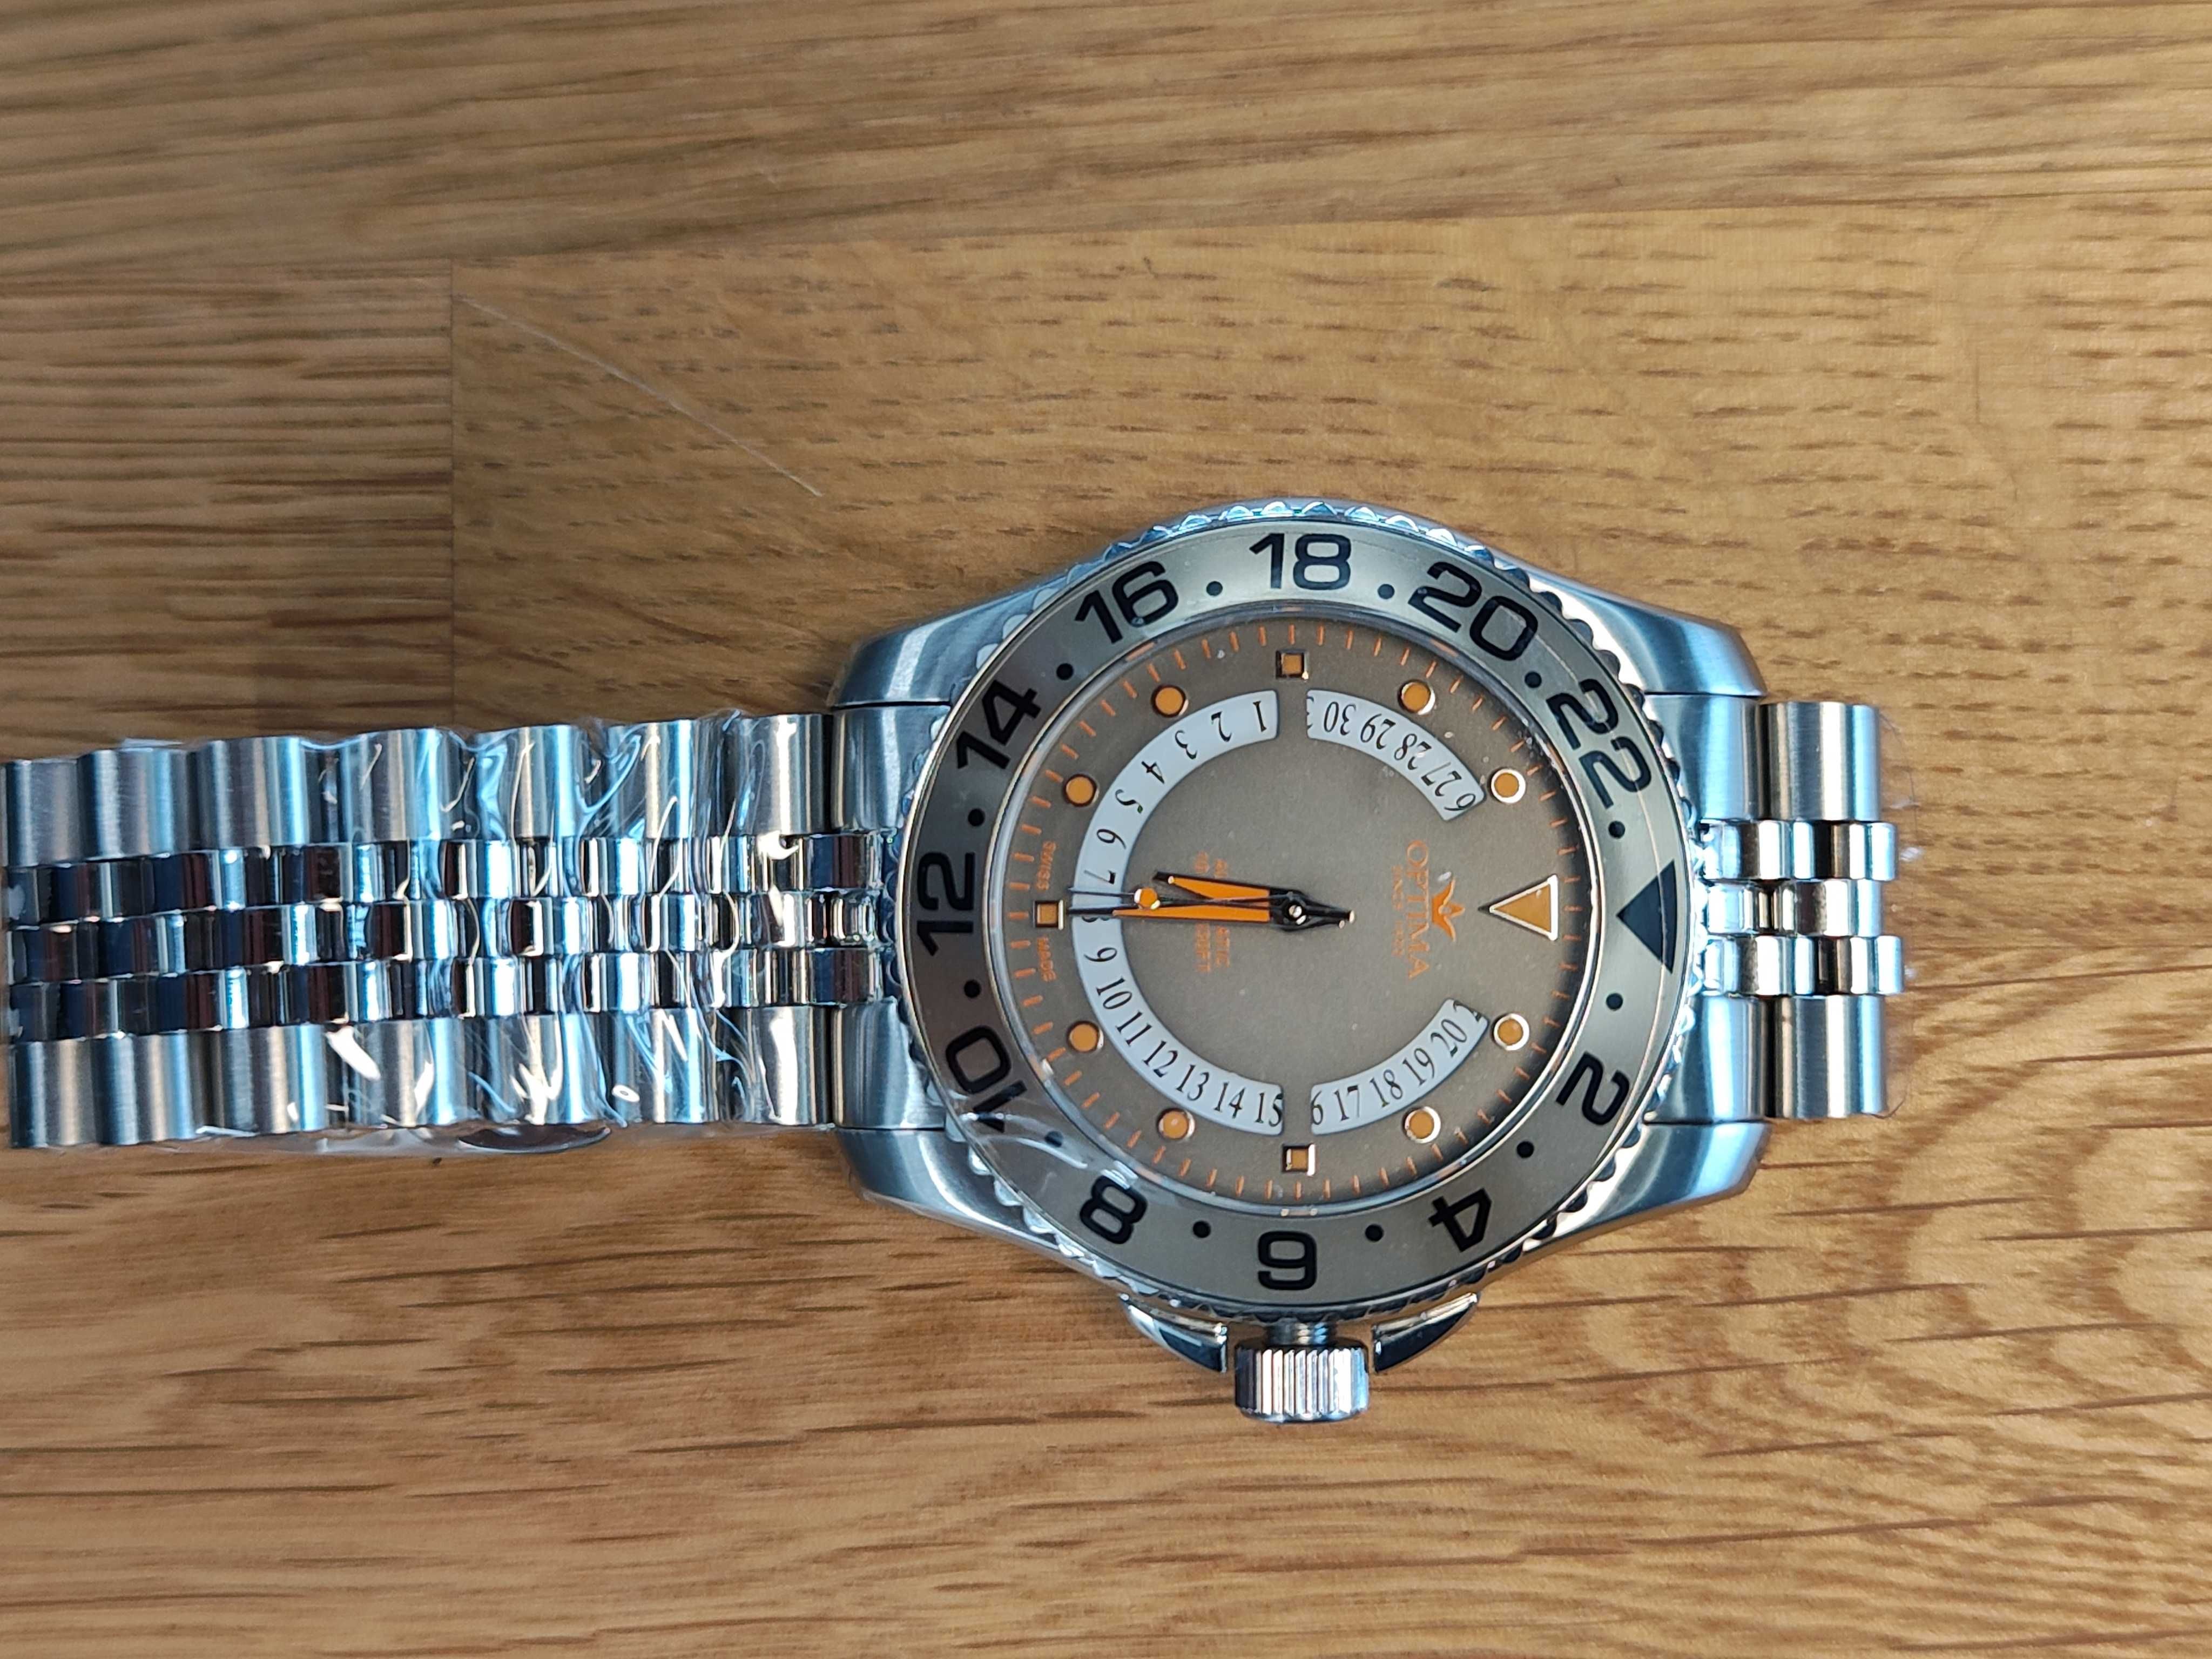 Часовник Optima - OSA468 Swiss Automatic